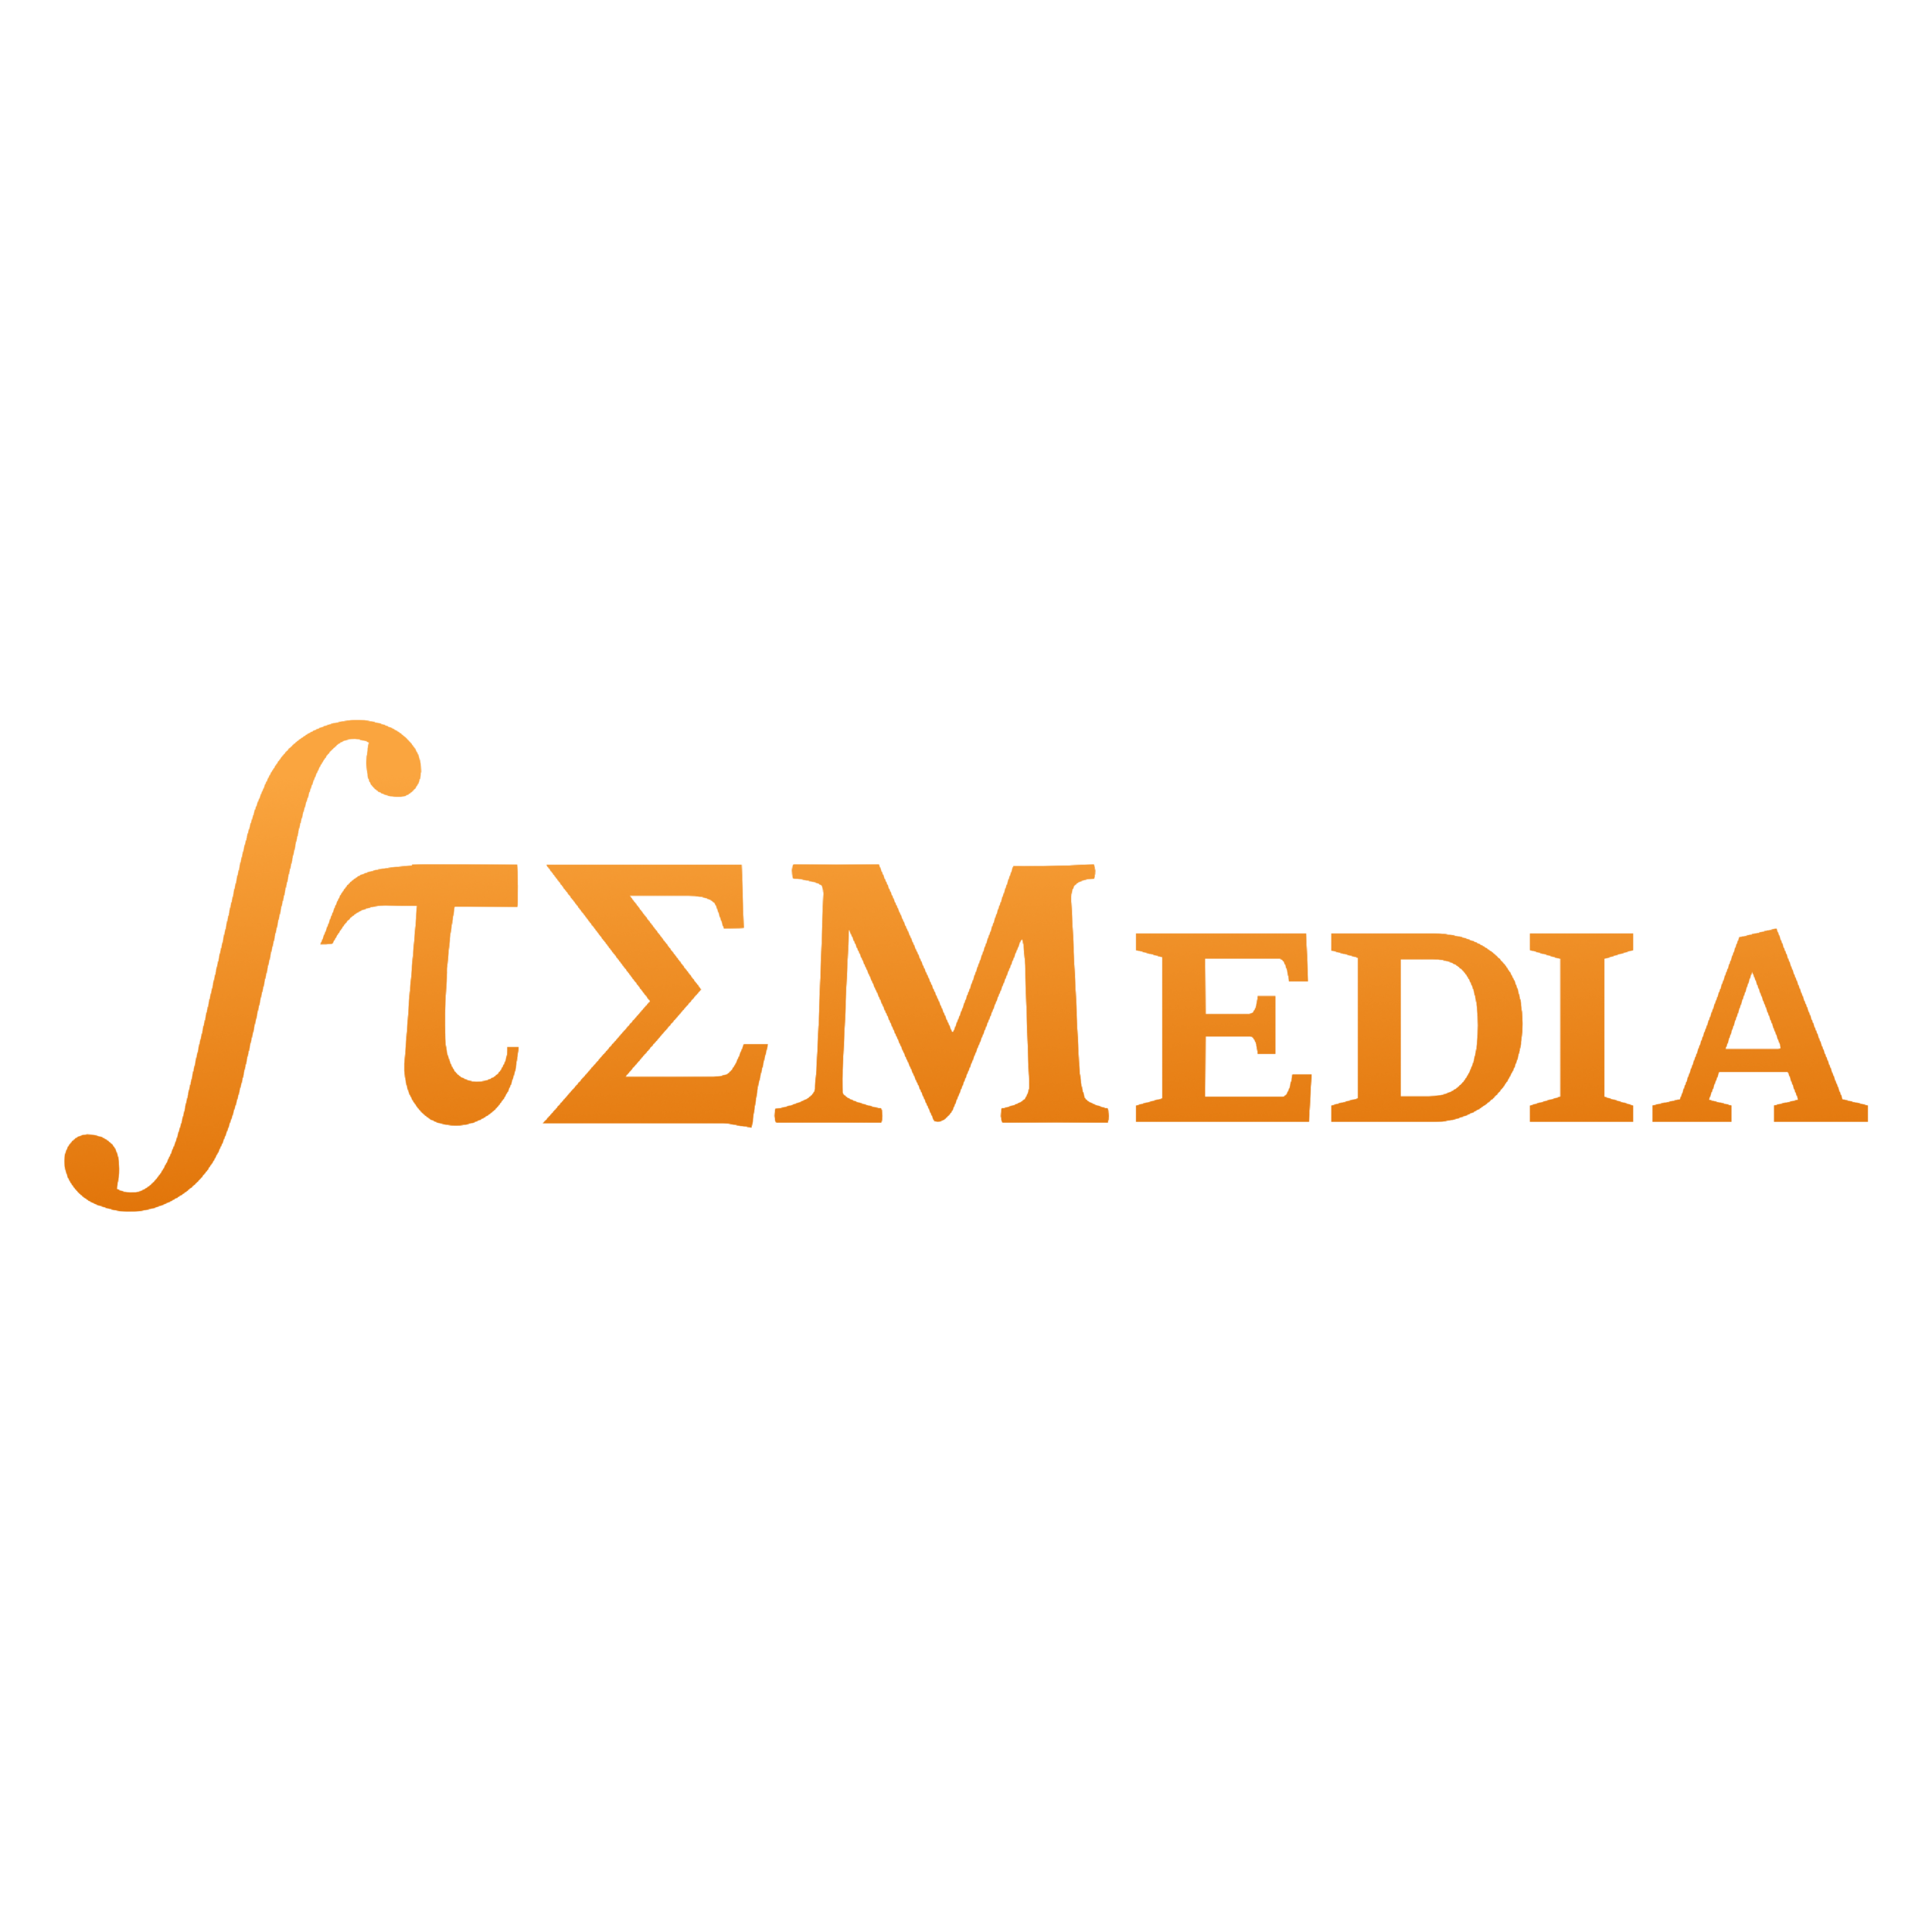 stemedia logo-07.png